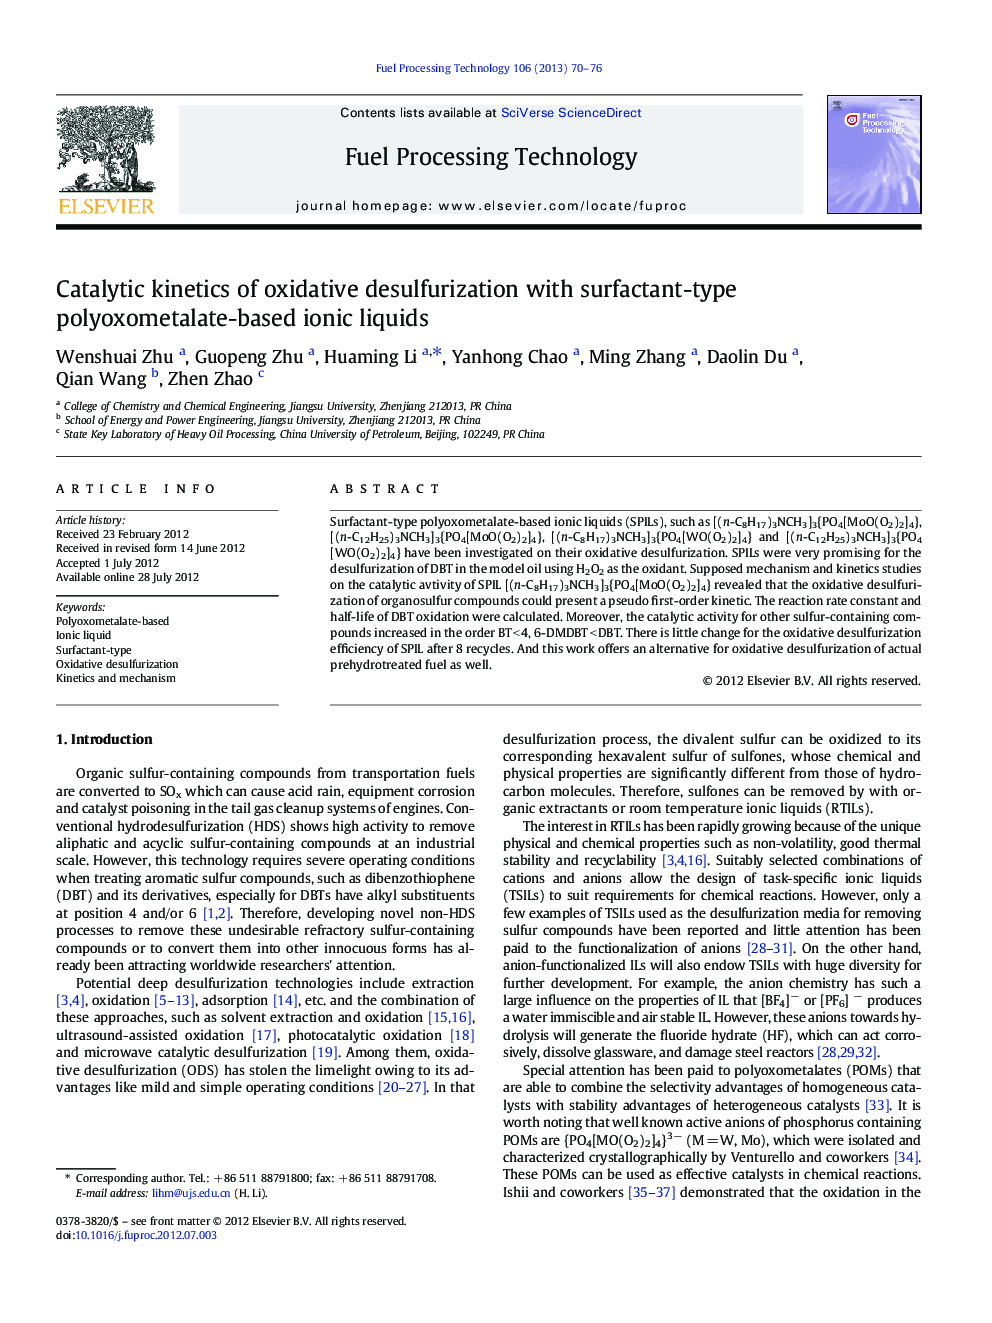 Catalytic kinetics of oxidative desulfurization with surfactant-type polyoxometalate-based ionic liquids